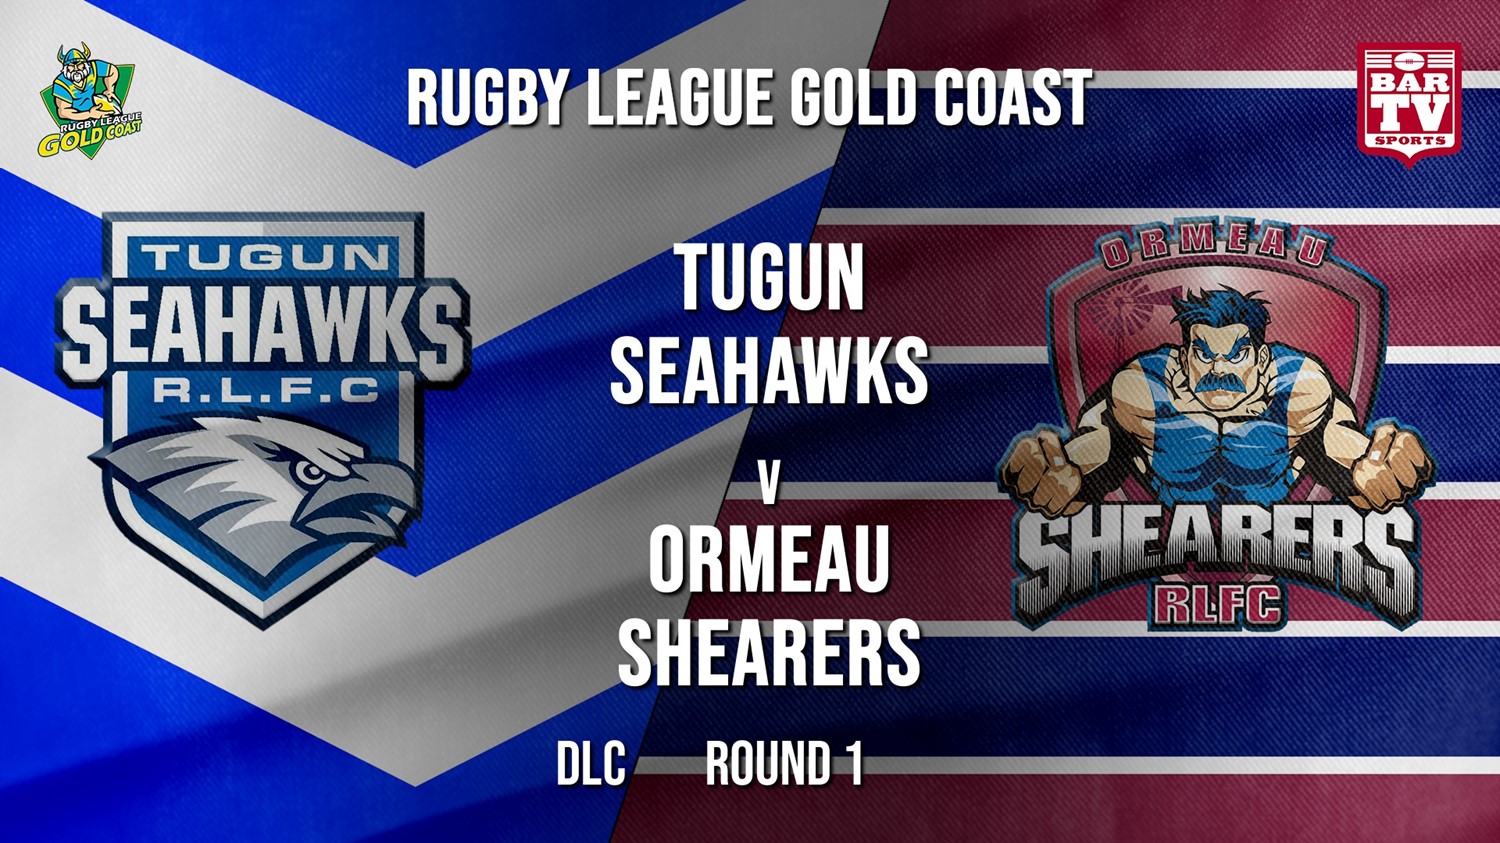 RLGC Round 1 - DLC - Tugun Seahawks v Ormeau Shearers Slate Image